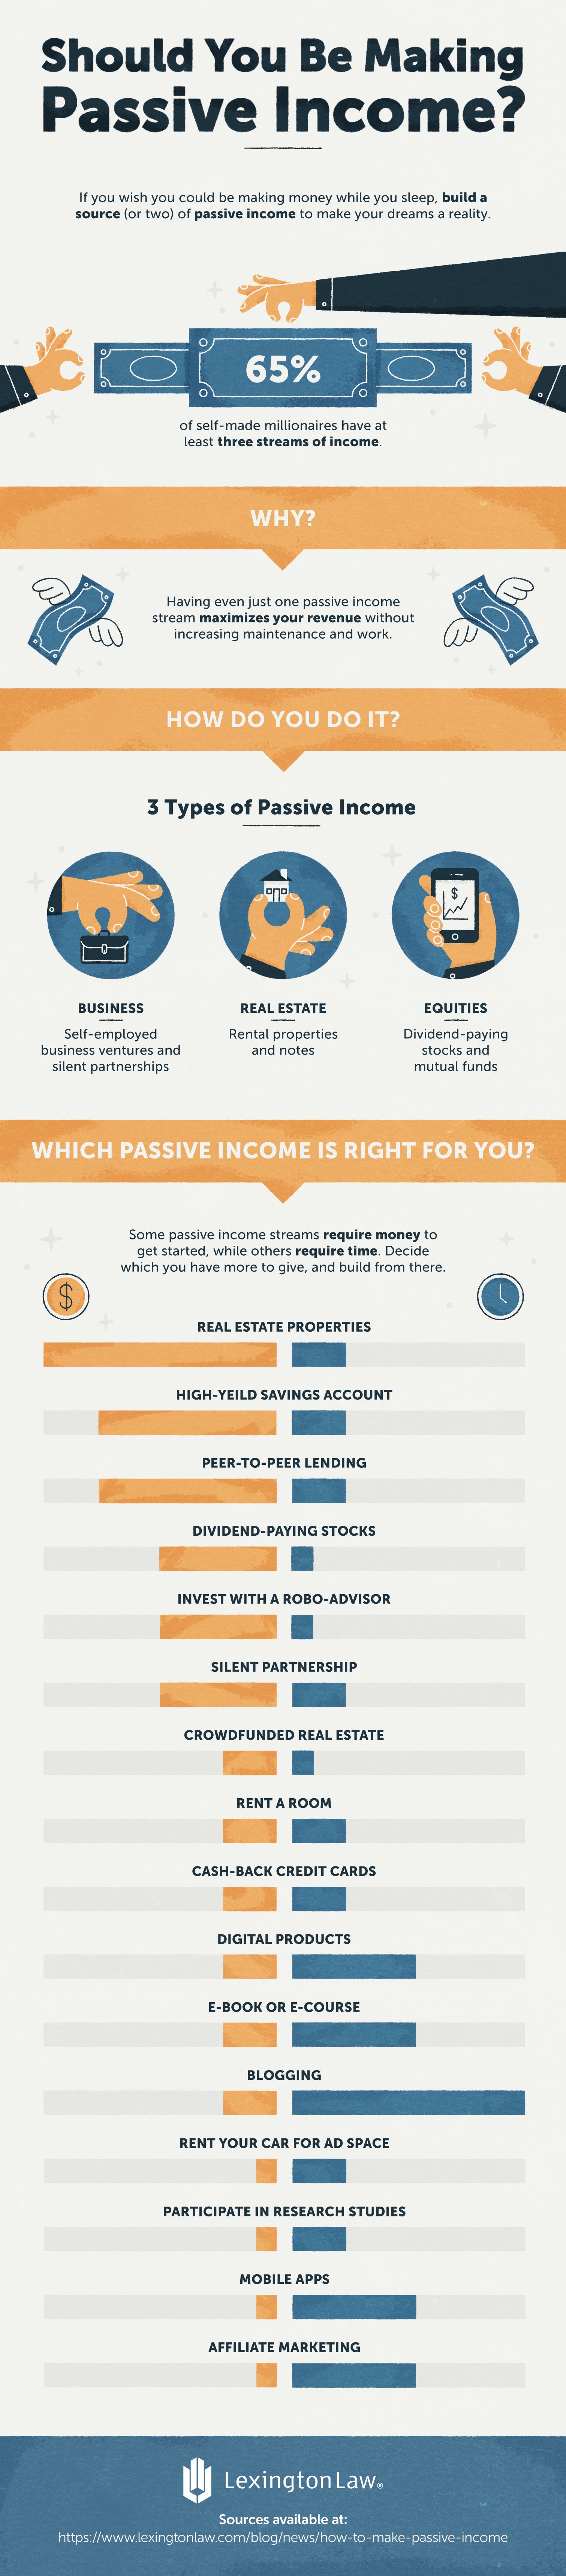 How to Make Passive Income